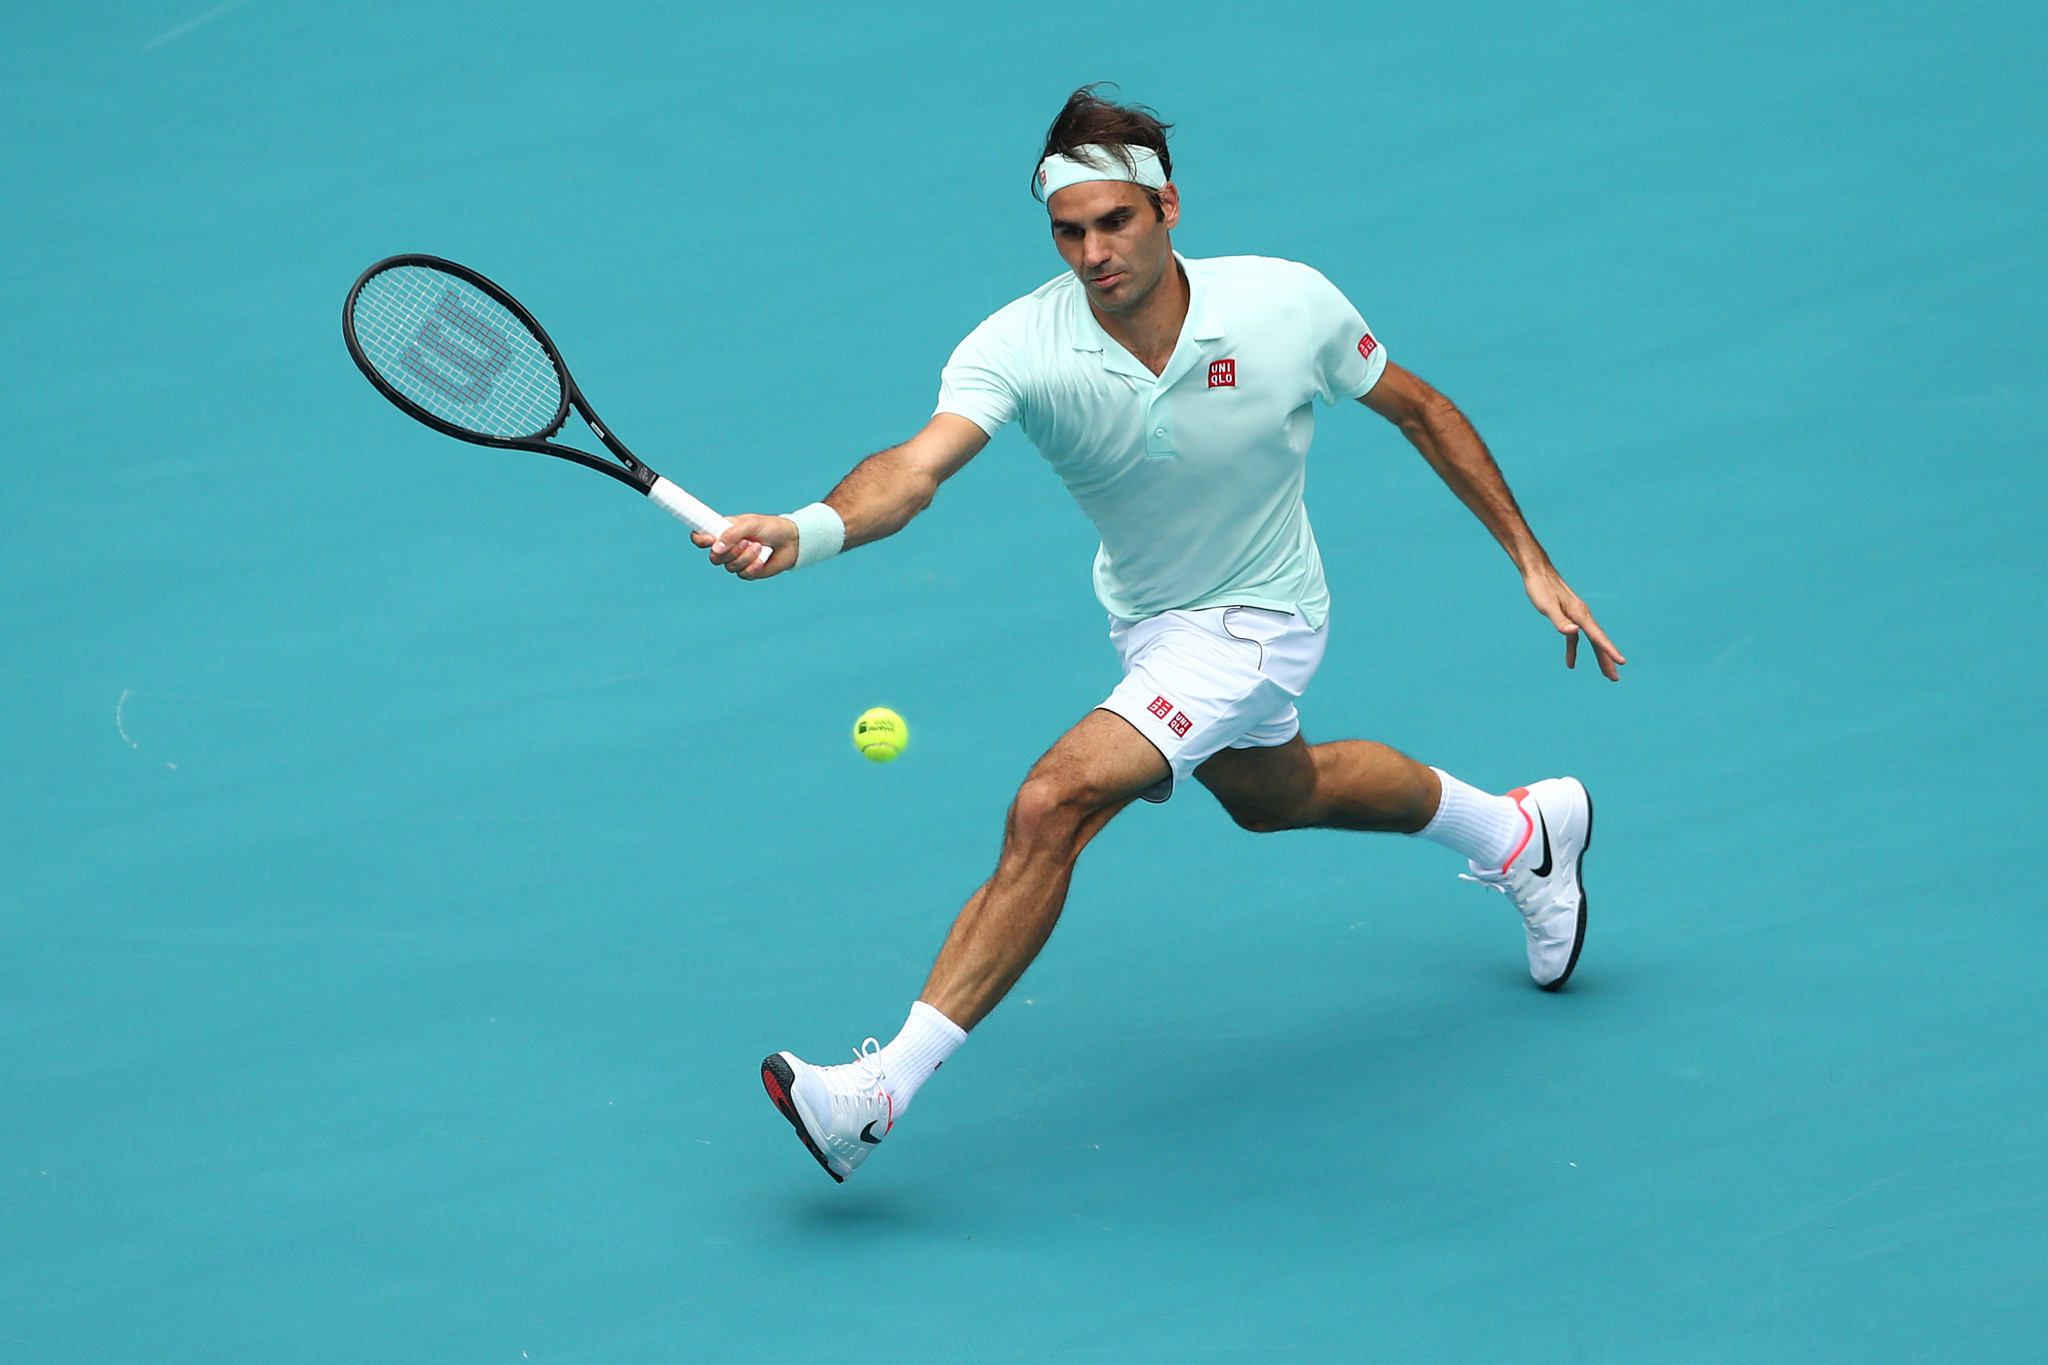 Federer eases past defending champion Isner to win Miami Open